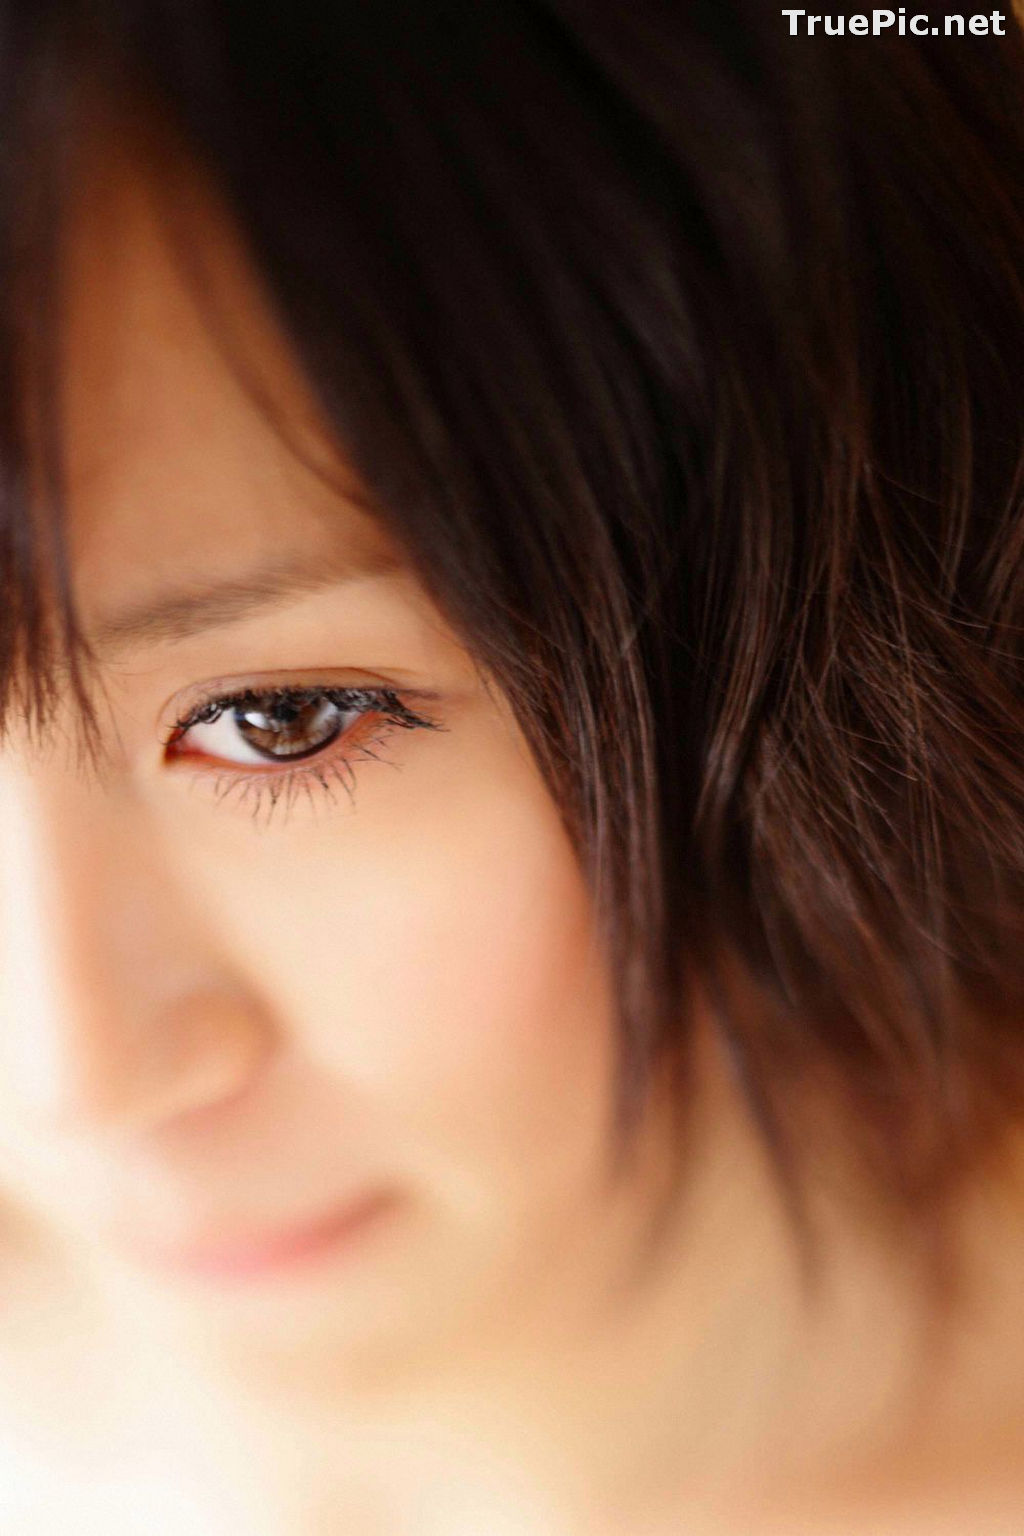 Image [YS Web] Vol.330 - Japanese Actress and Singer - Maeda Atsuko - TruePic.net - Picture-36